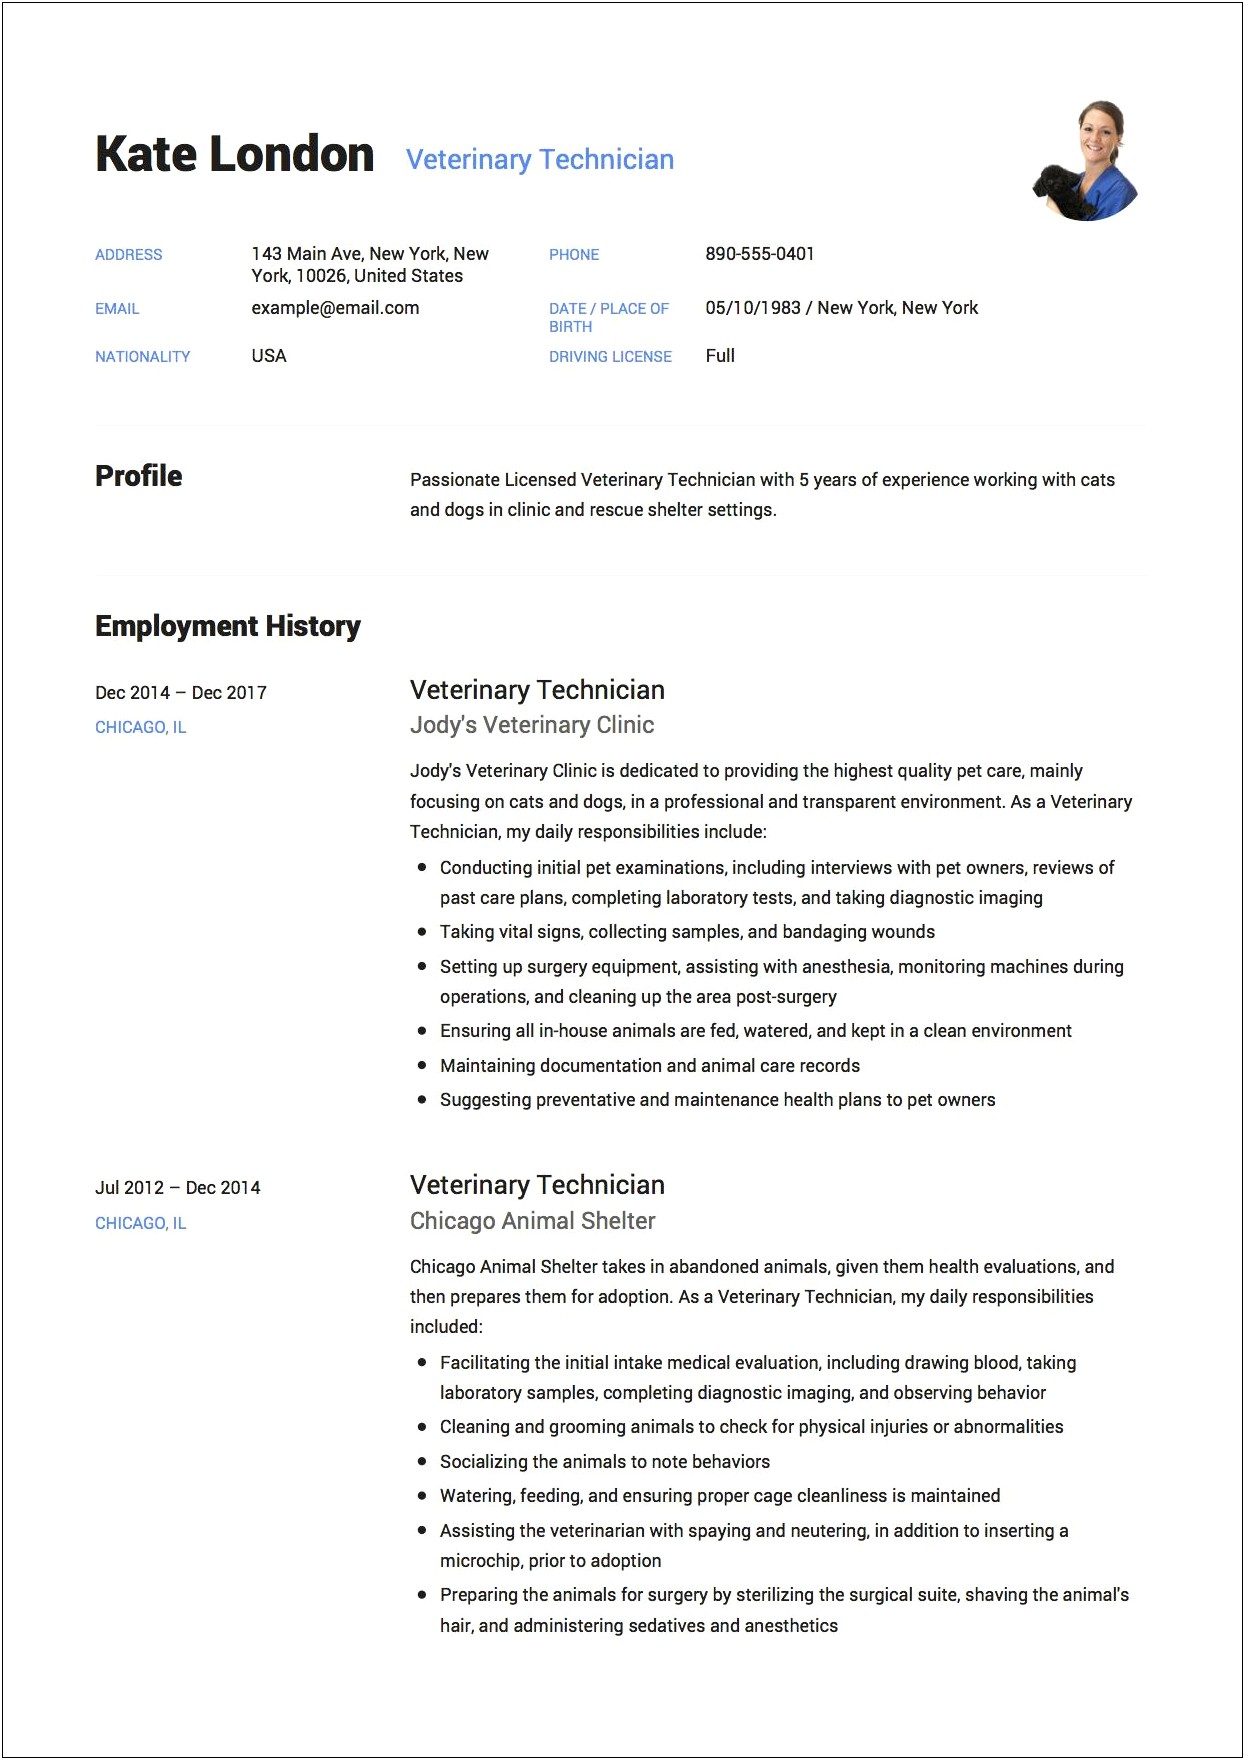 Veterinary Technician Job Description For Resume